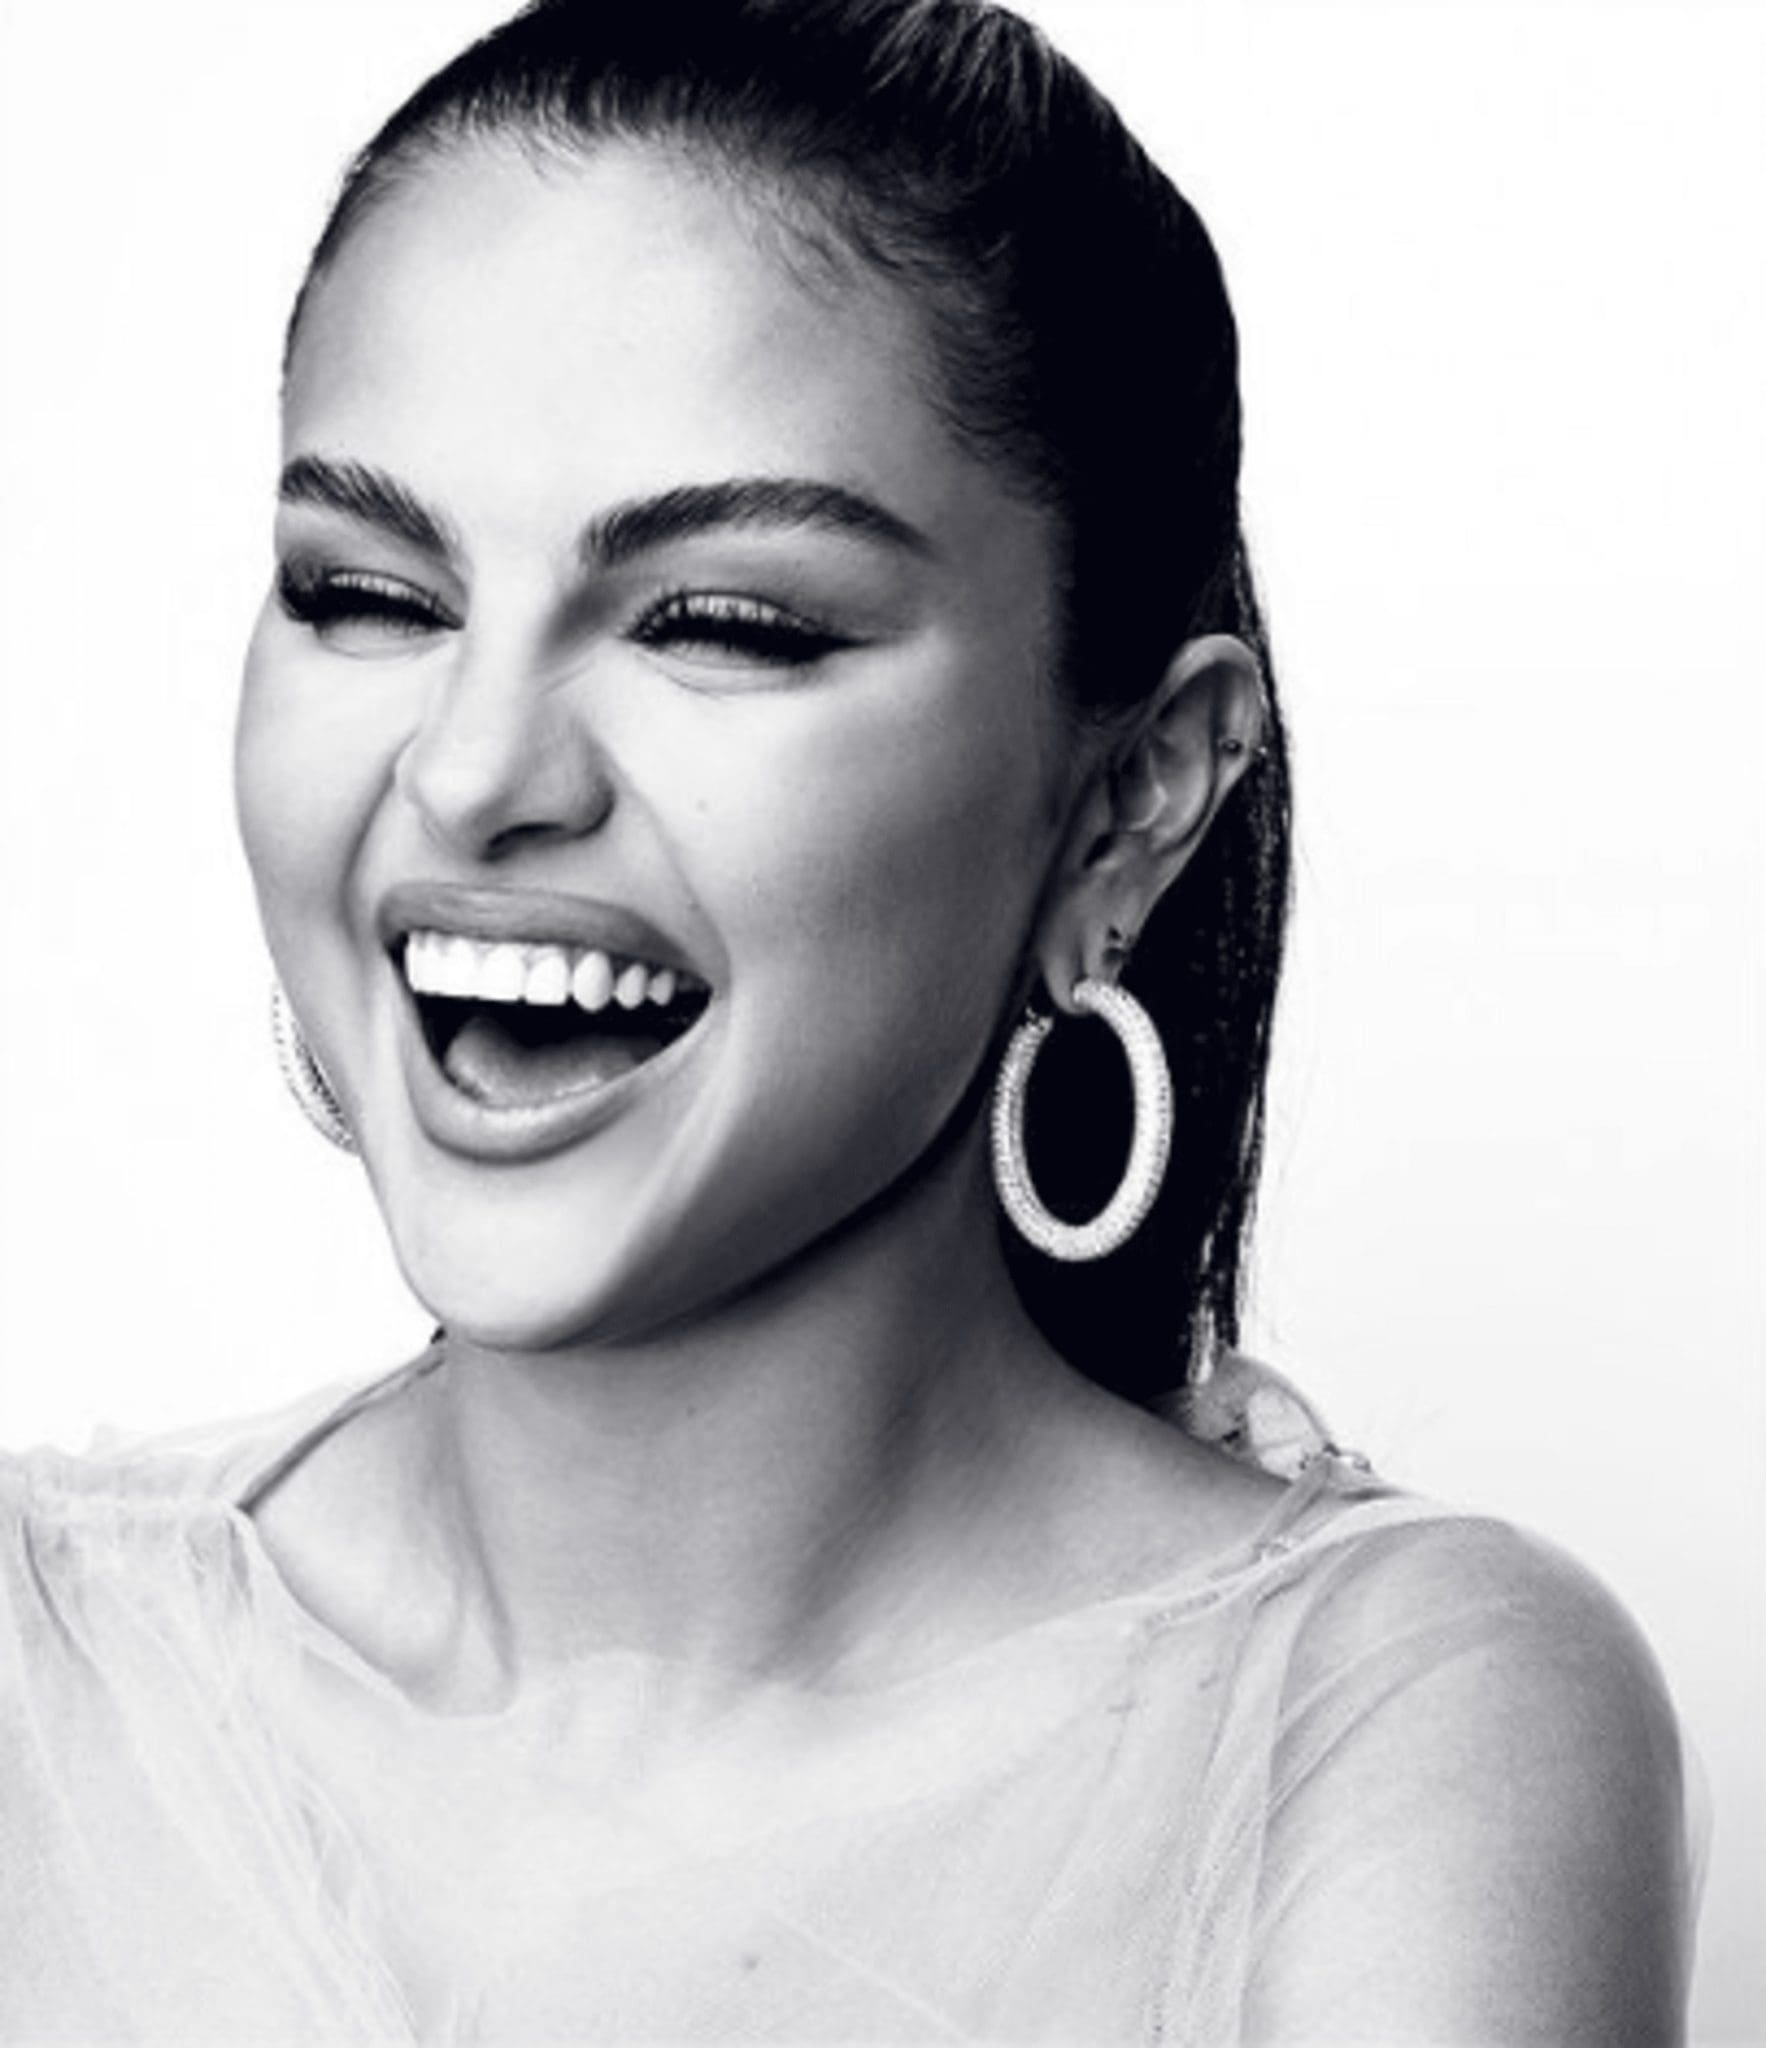 Apple TV will broadcast the Selena Gomez: My Mind & Me documentary.